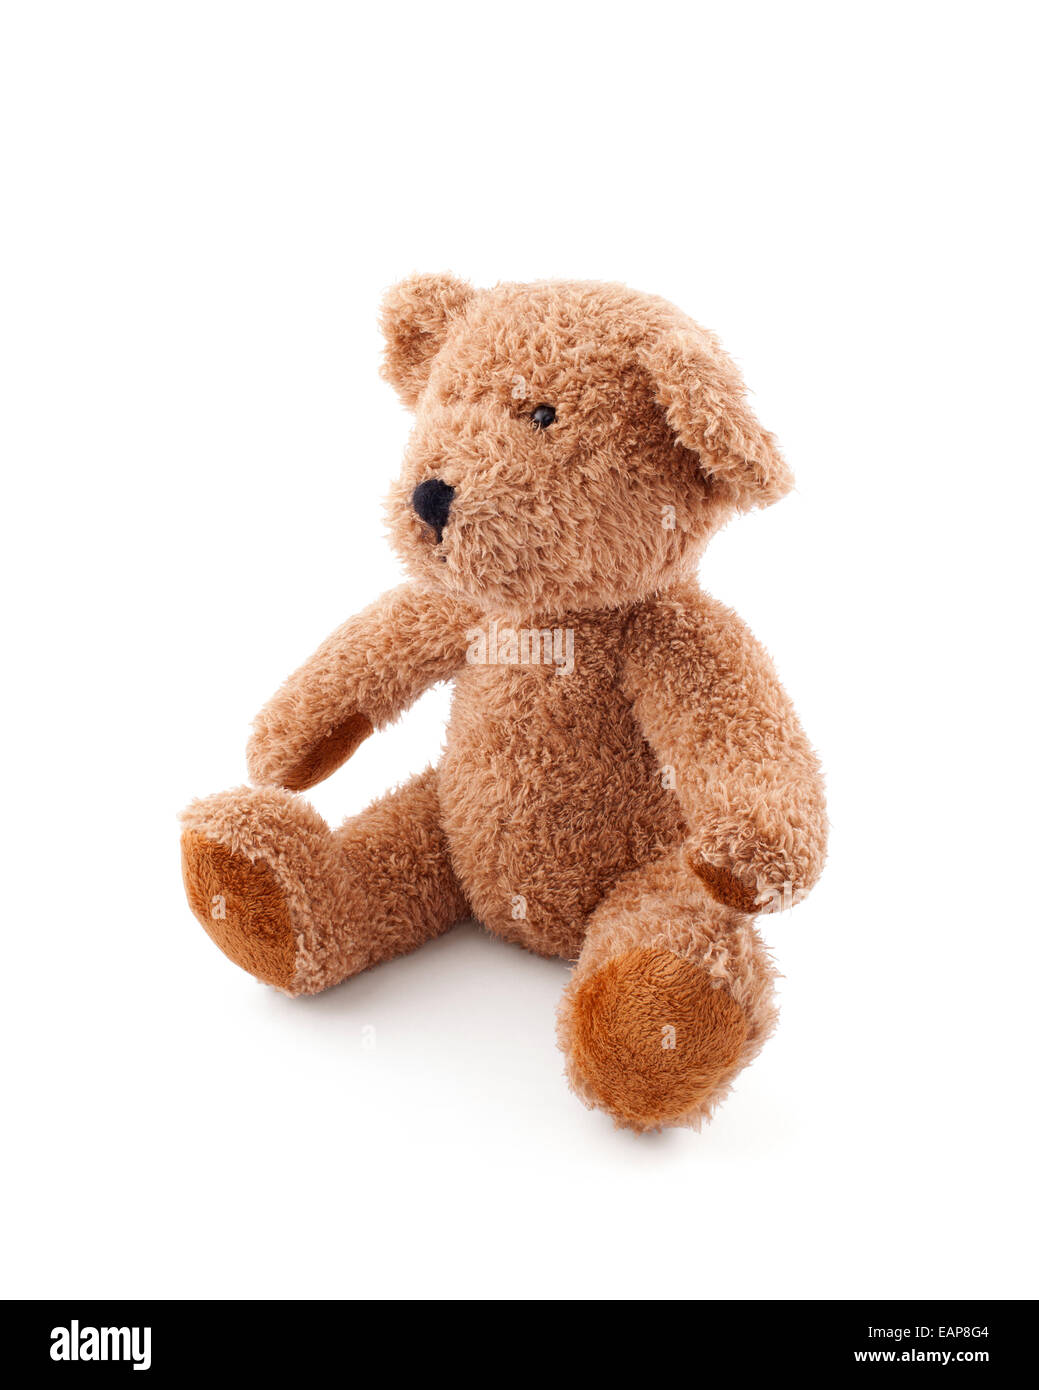 Brown teddy bear on white background Stock Photo